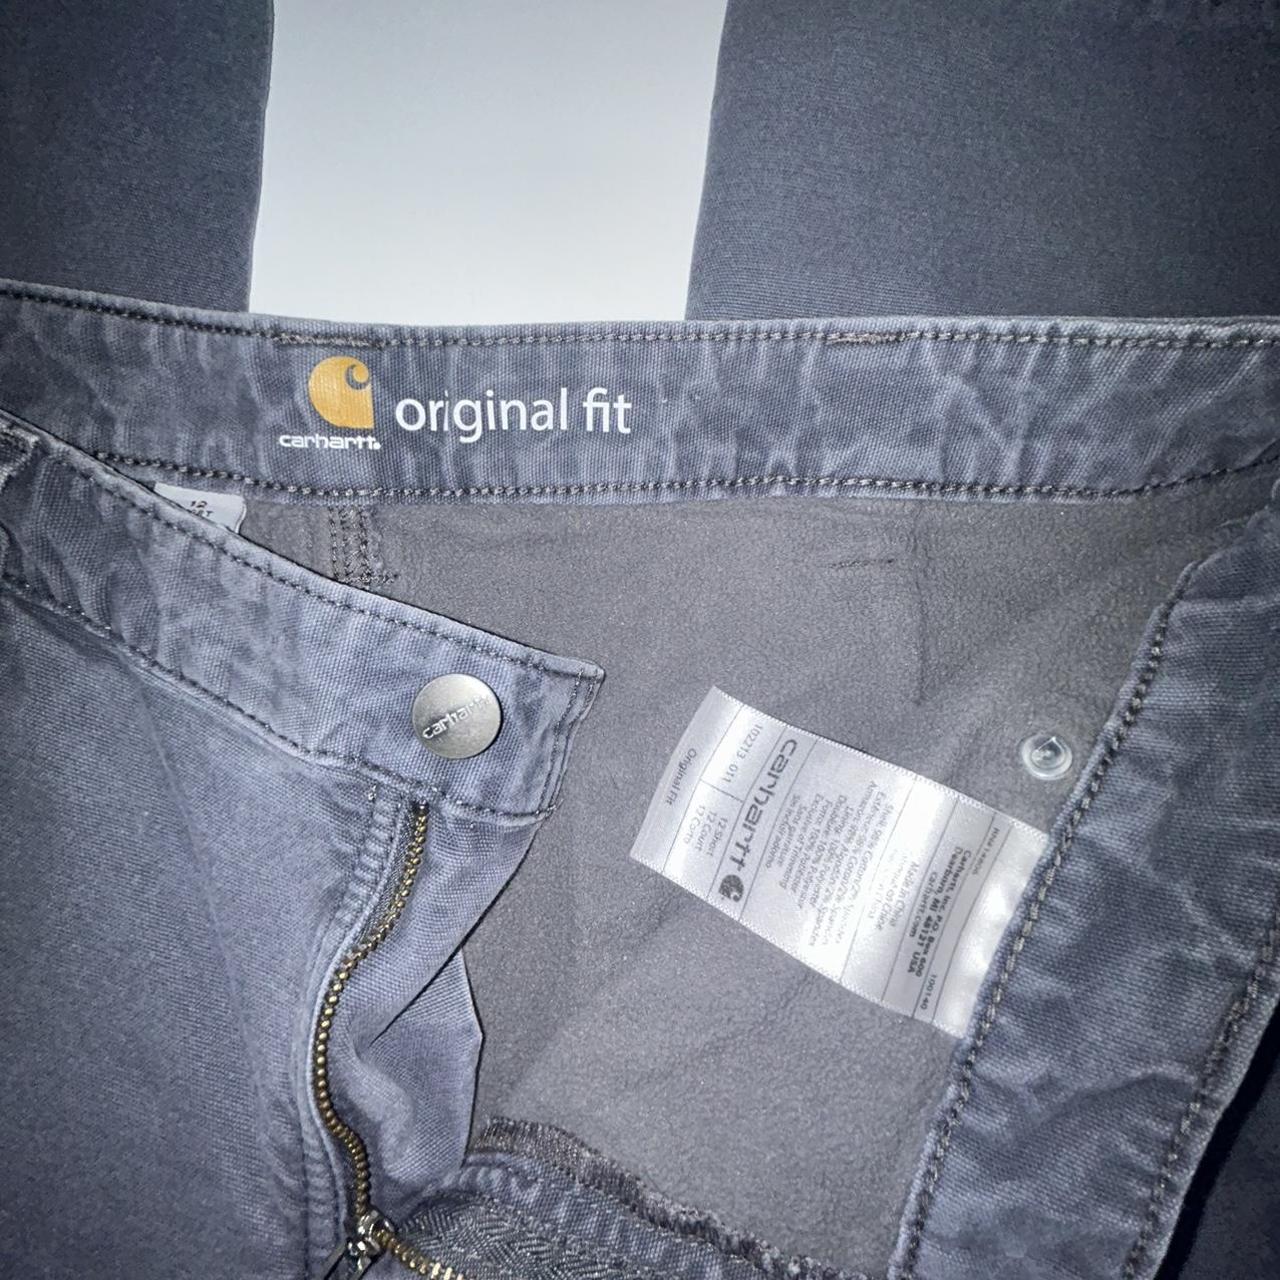 Carhartt Original Fit Insulated Grey Pants Fleece - Depop